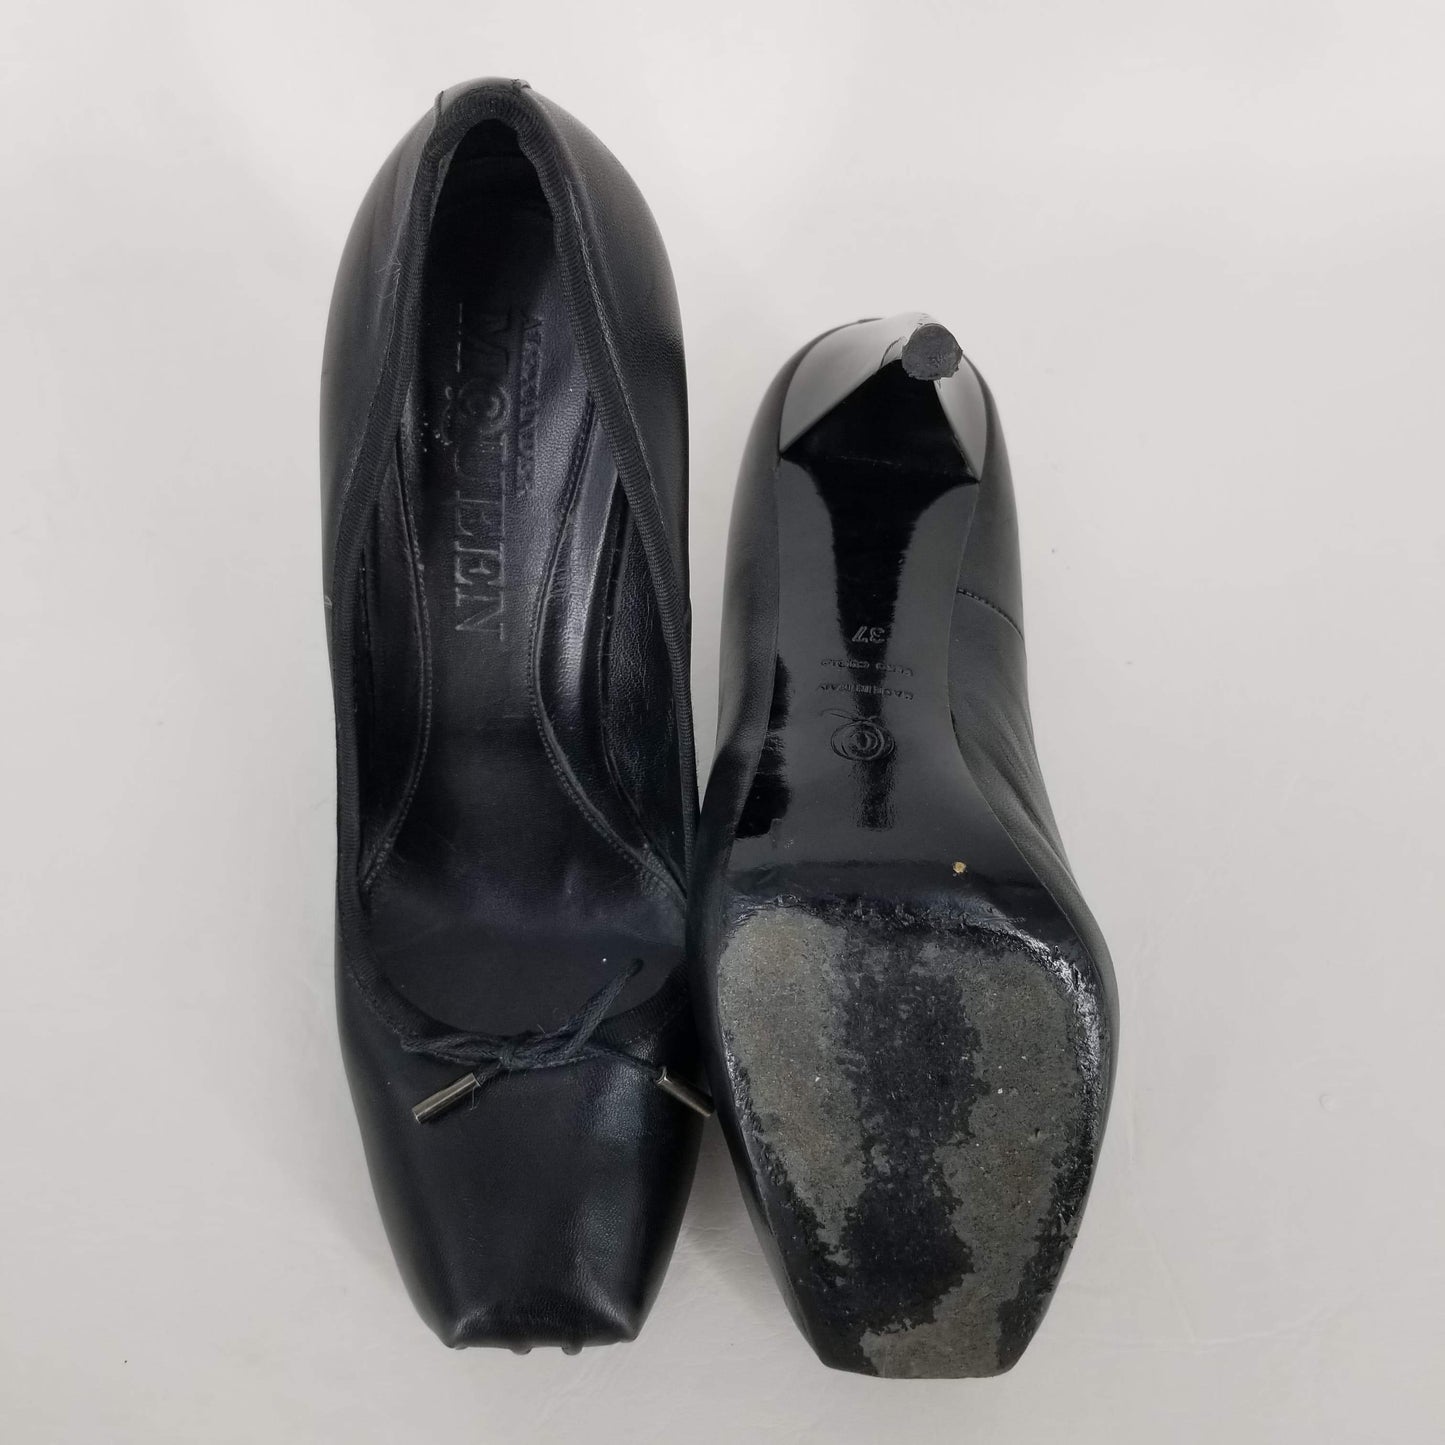 Authentic Alexander McQueen Black Ballet Style Pumps